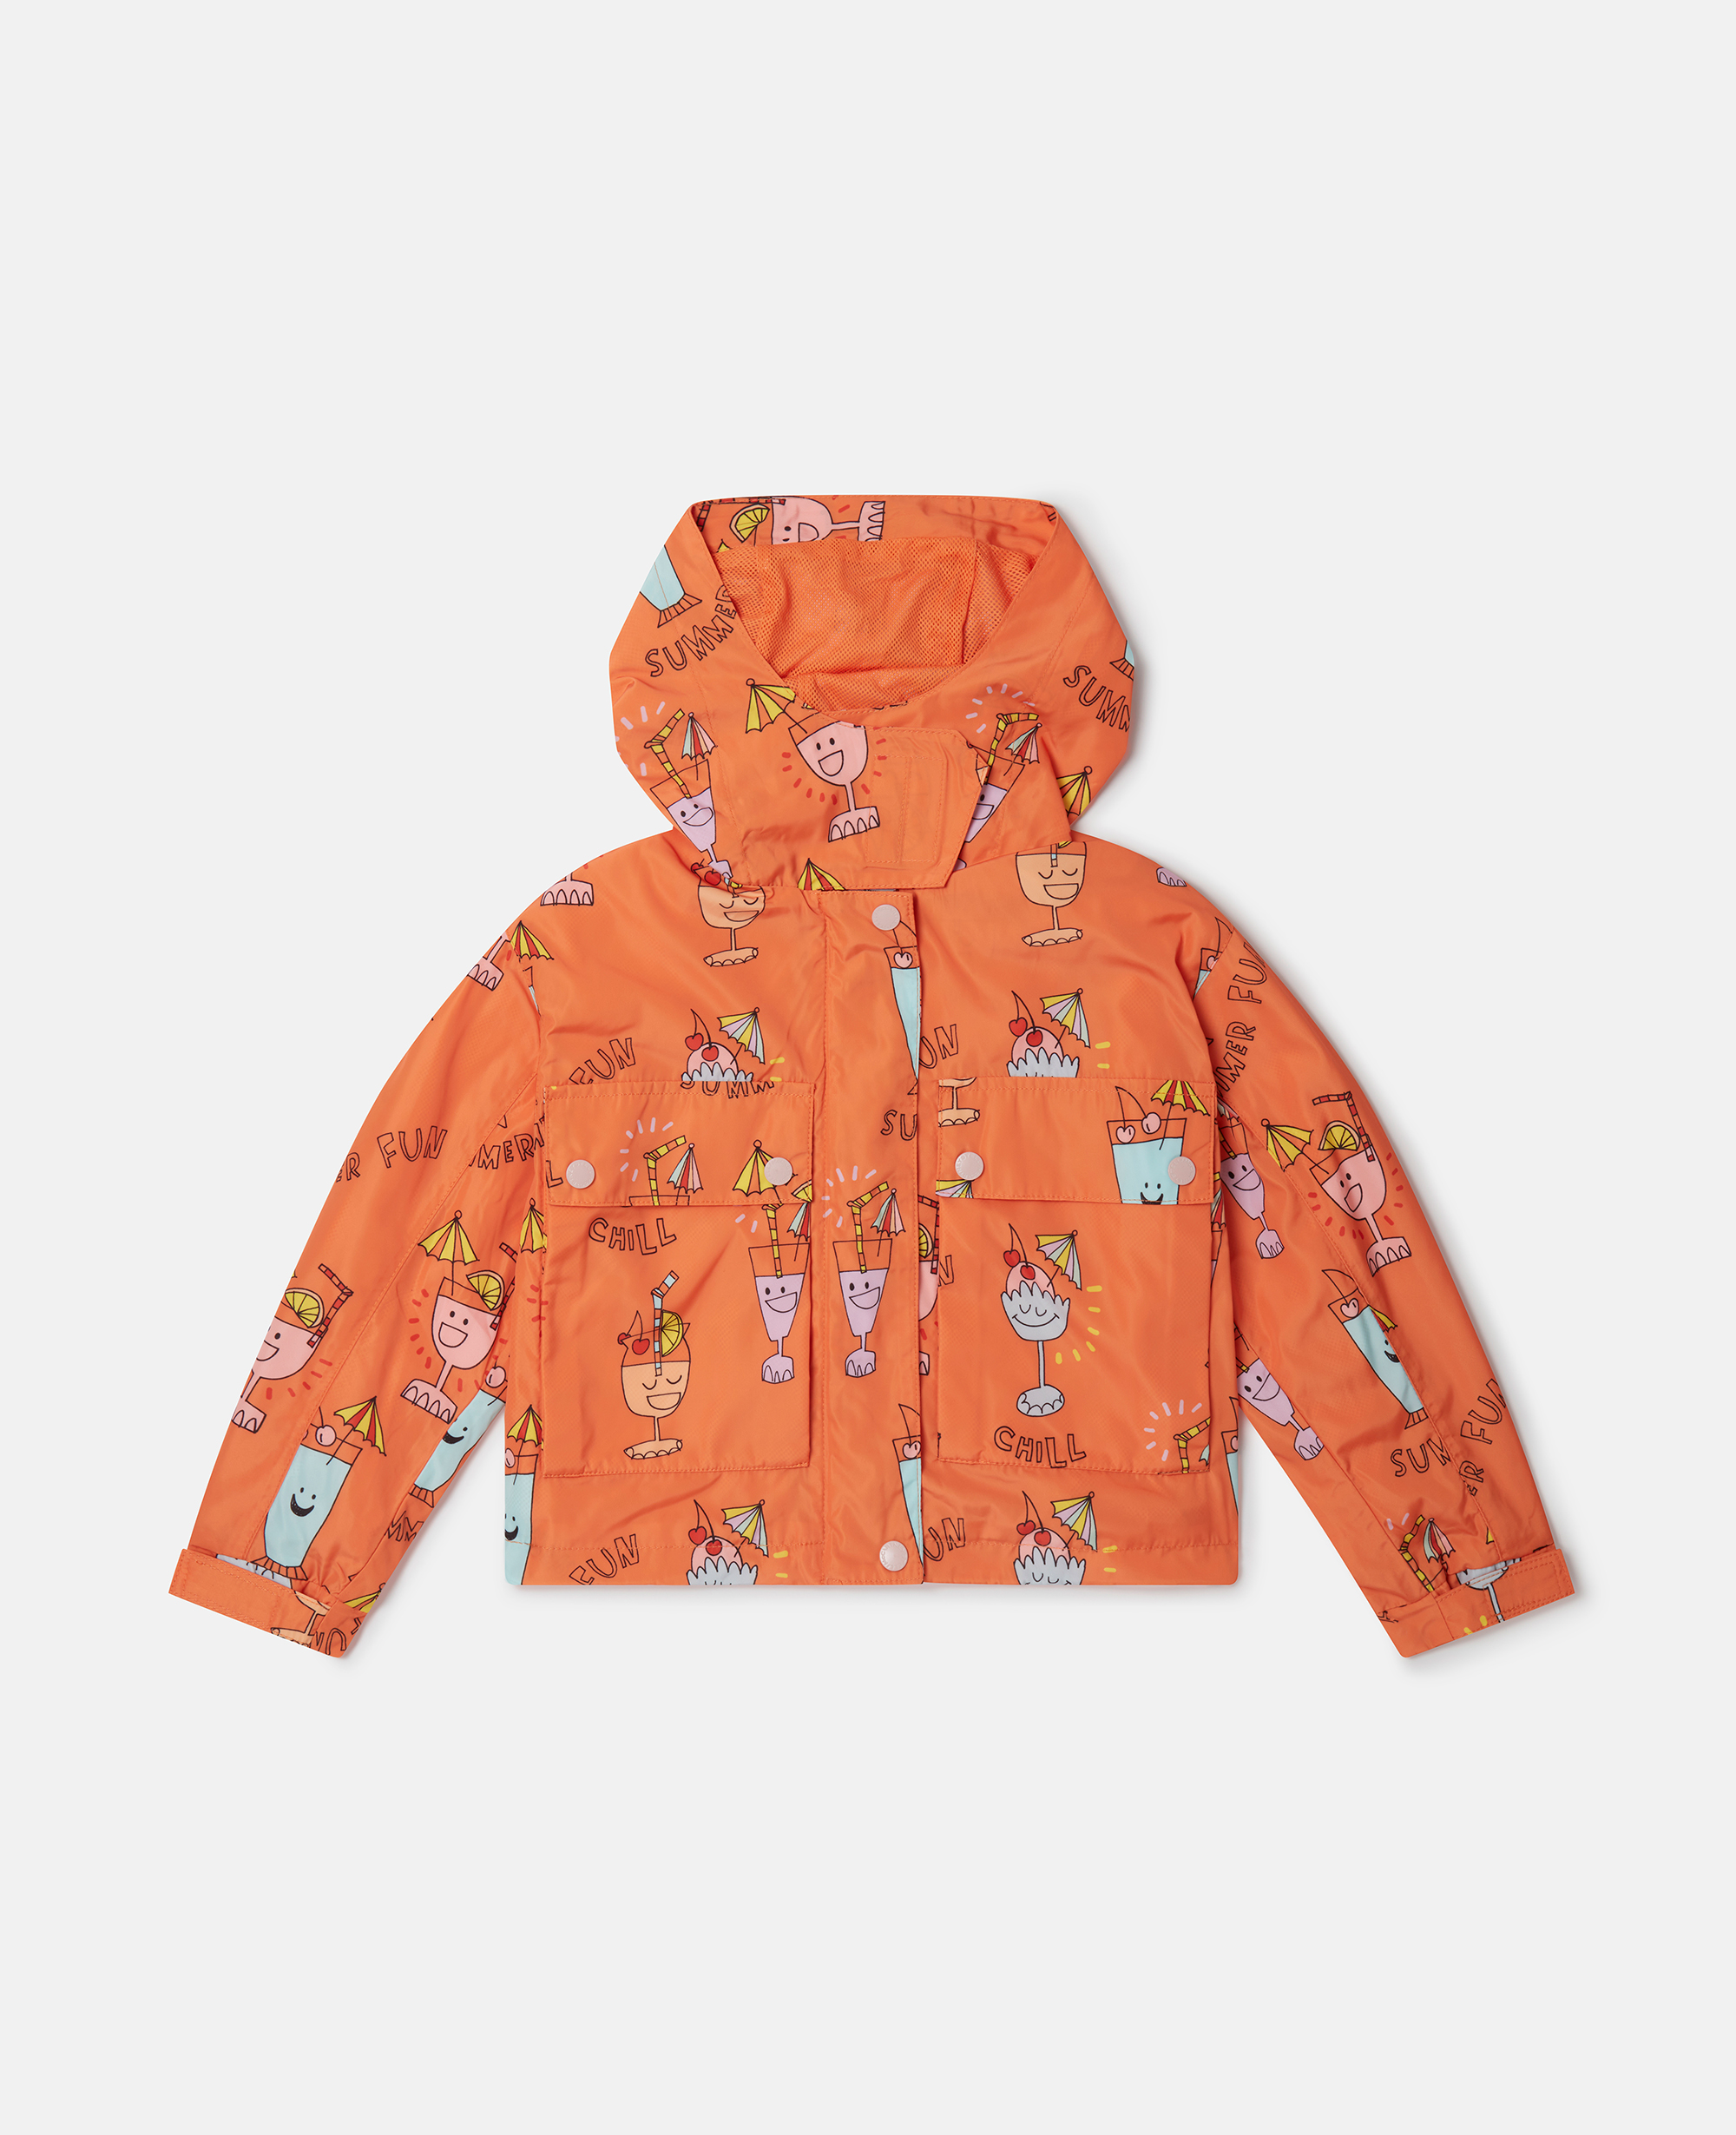 stella mccartney - summer doodles print hooded jacket, woman, orange, size: 5